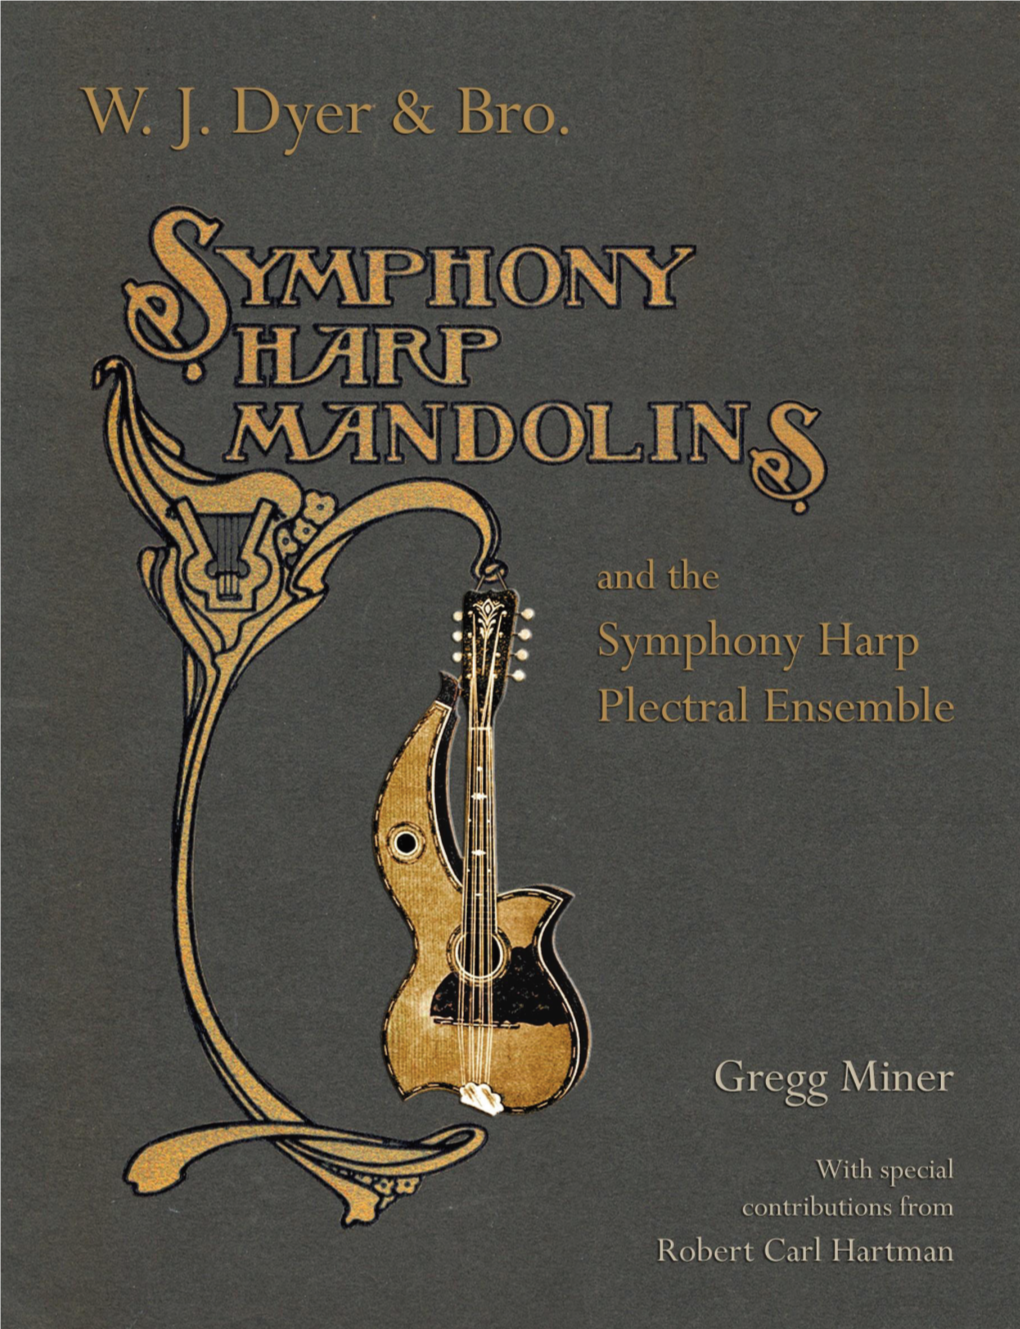 W. J. Dyer & Bro. Symphony Harp Mandolins